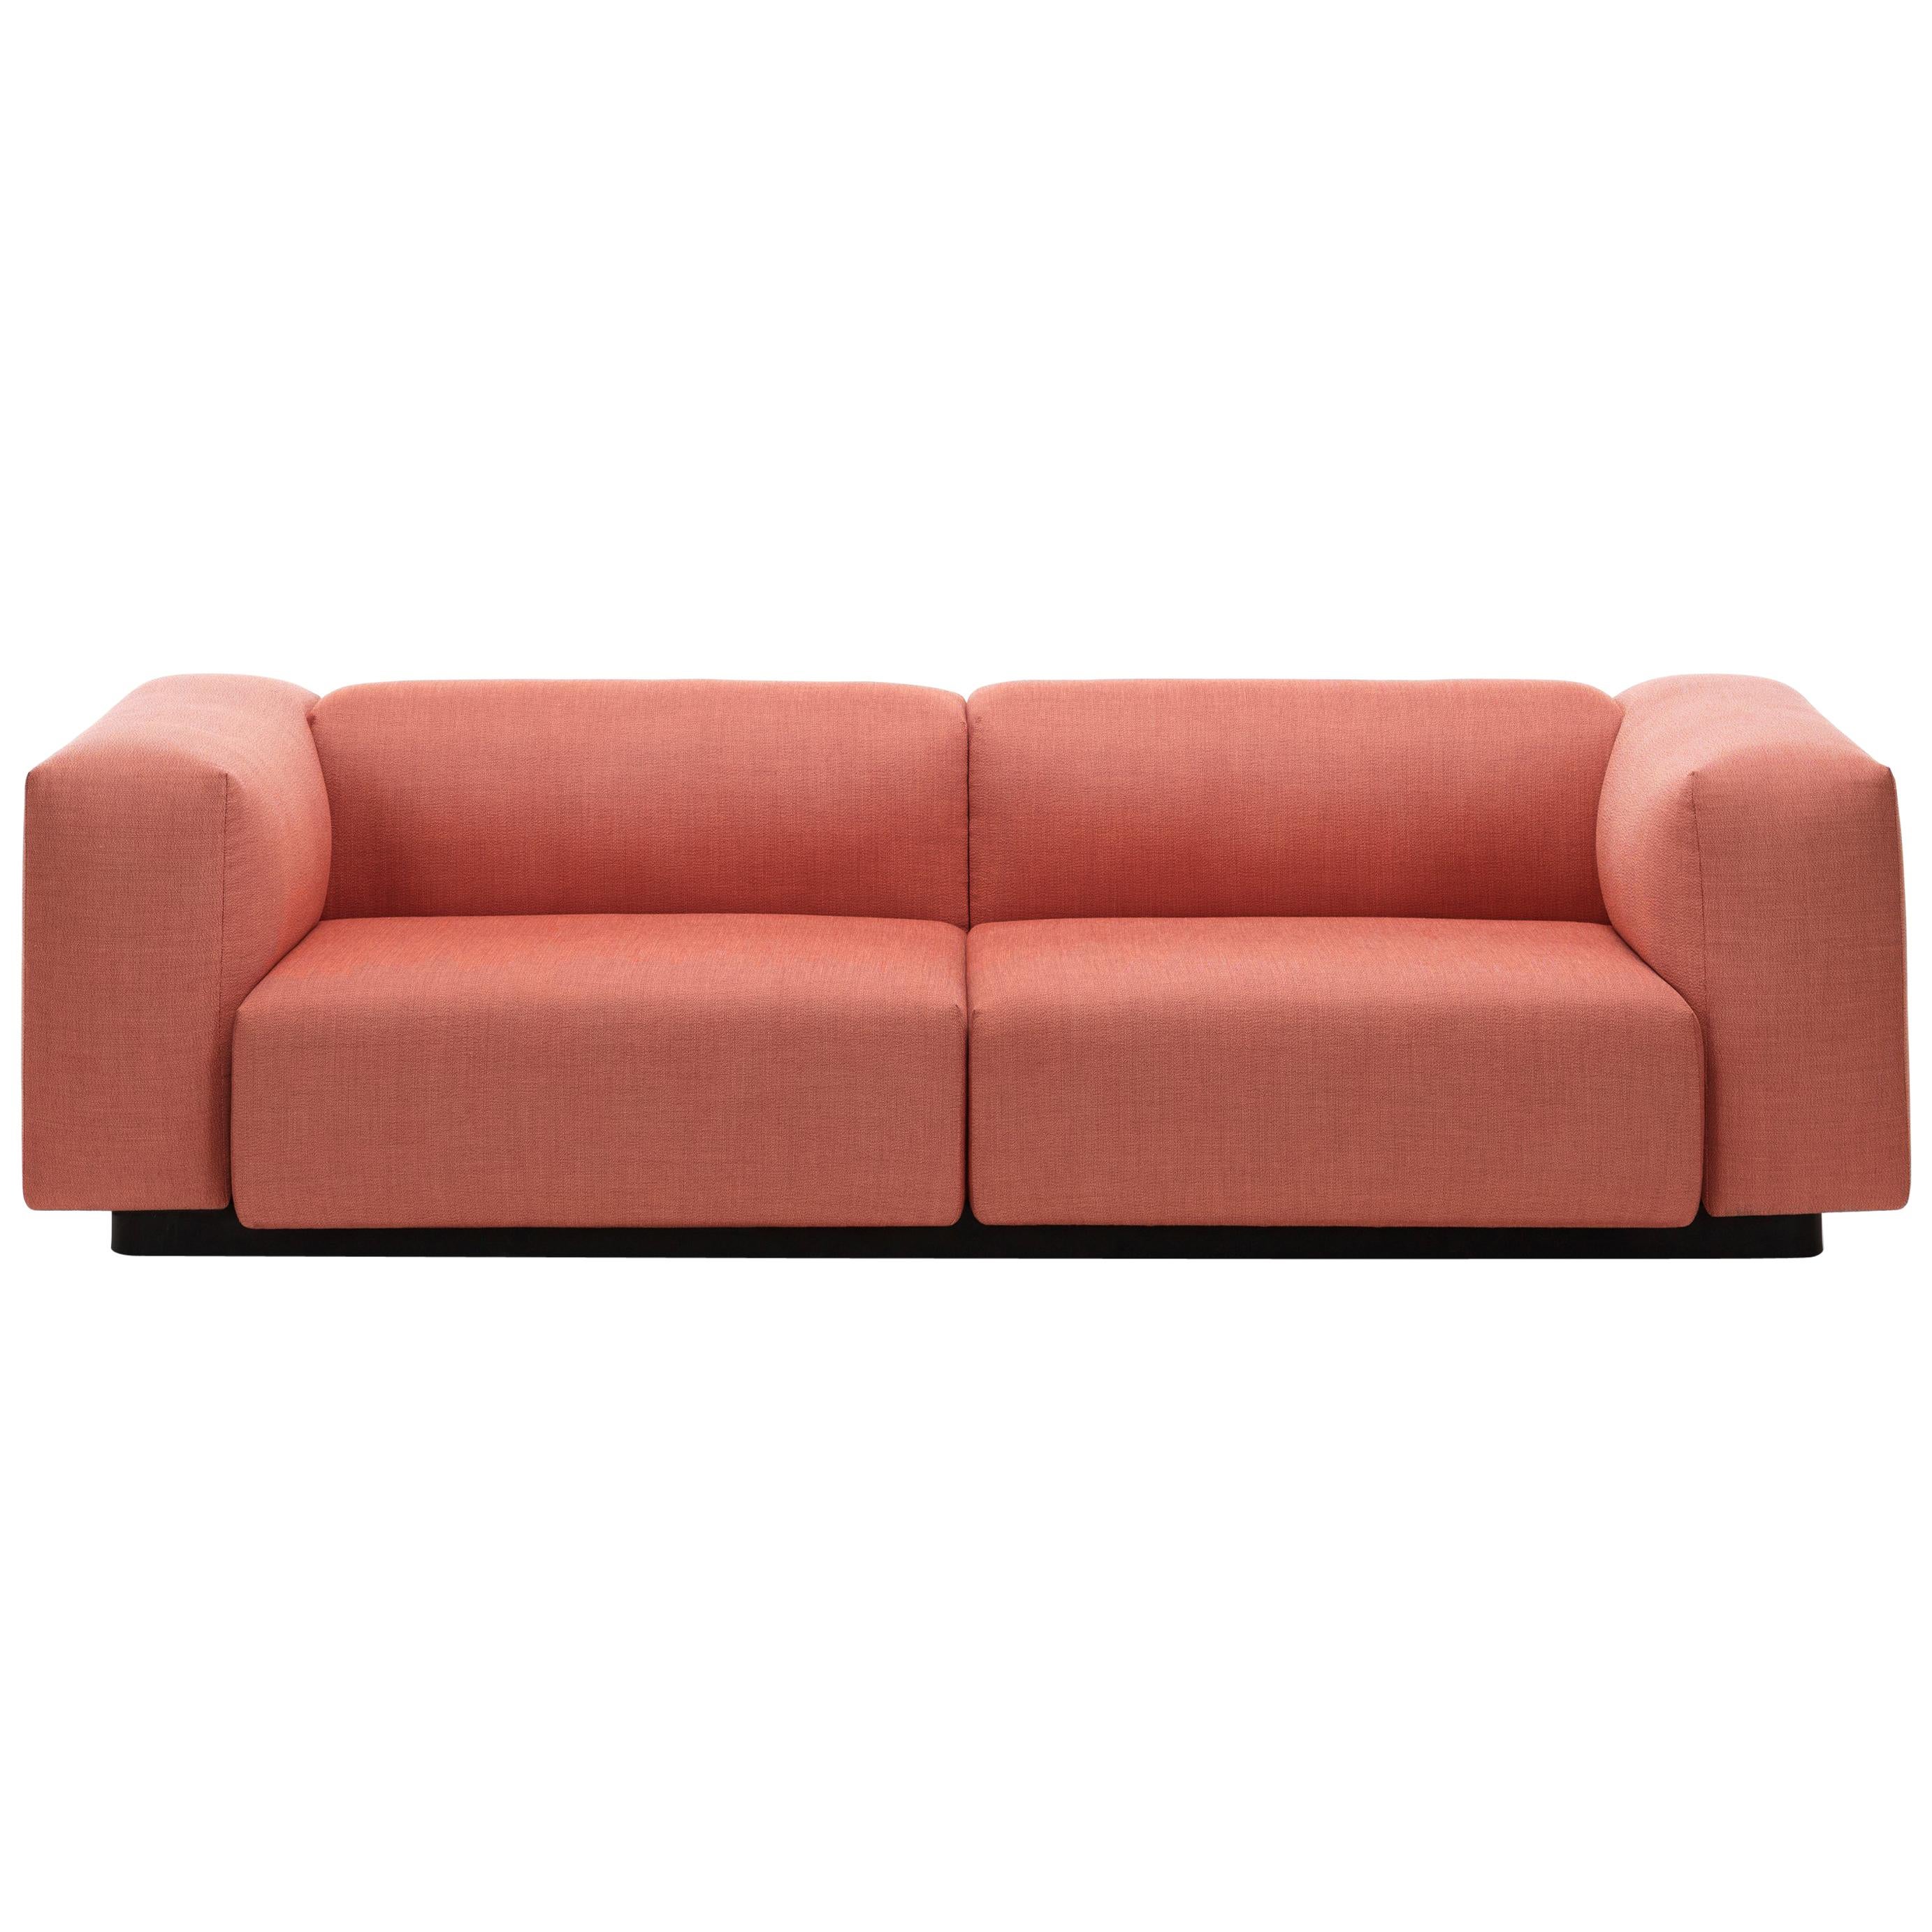 Vitra Soft Modular 2-Seat Sofa in Rose and Dark Orange Credo by Jasper Morrison For Sale